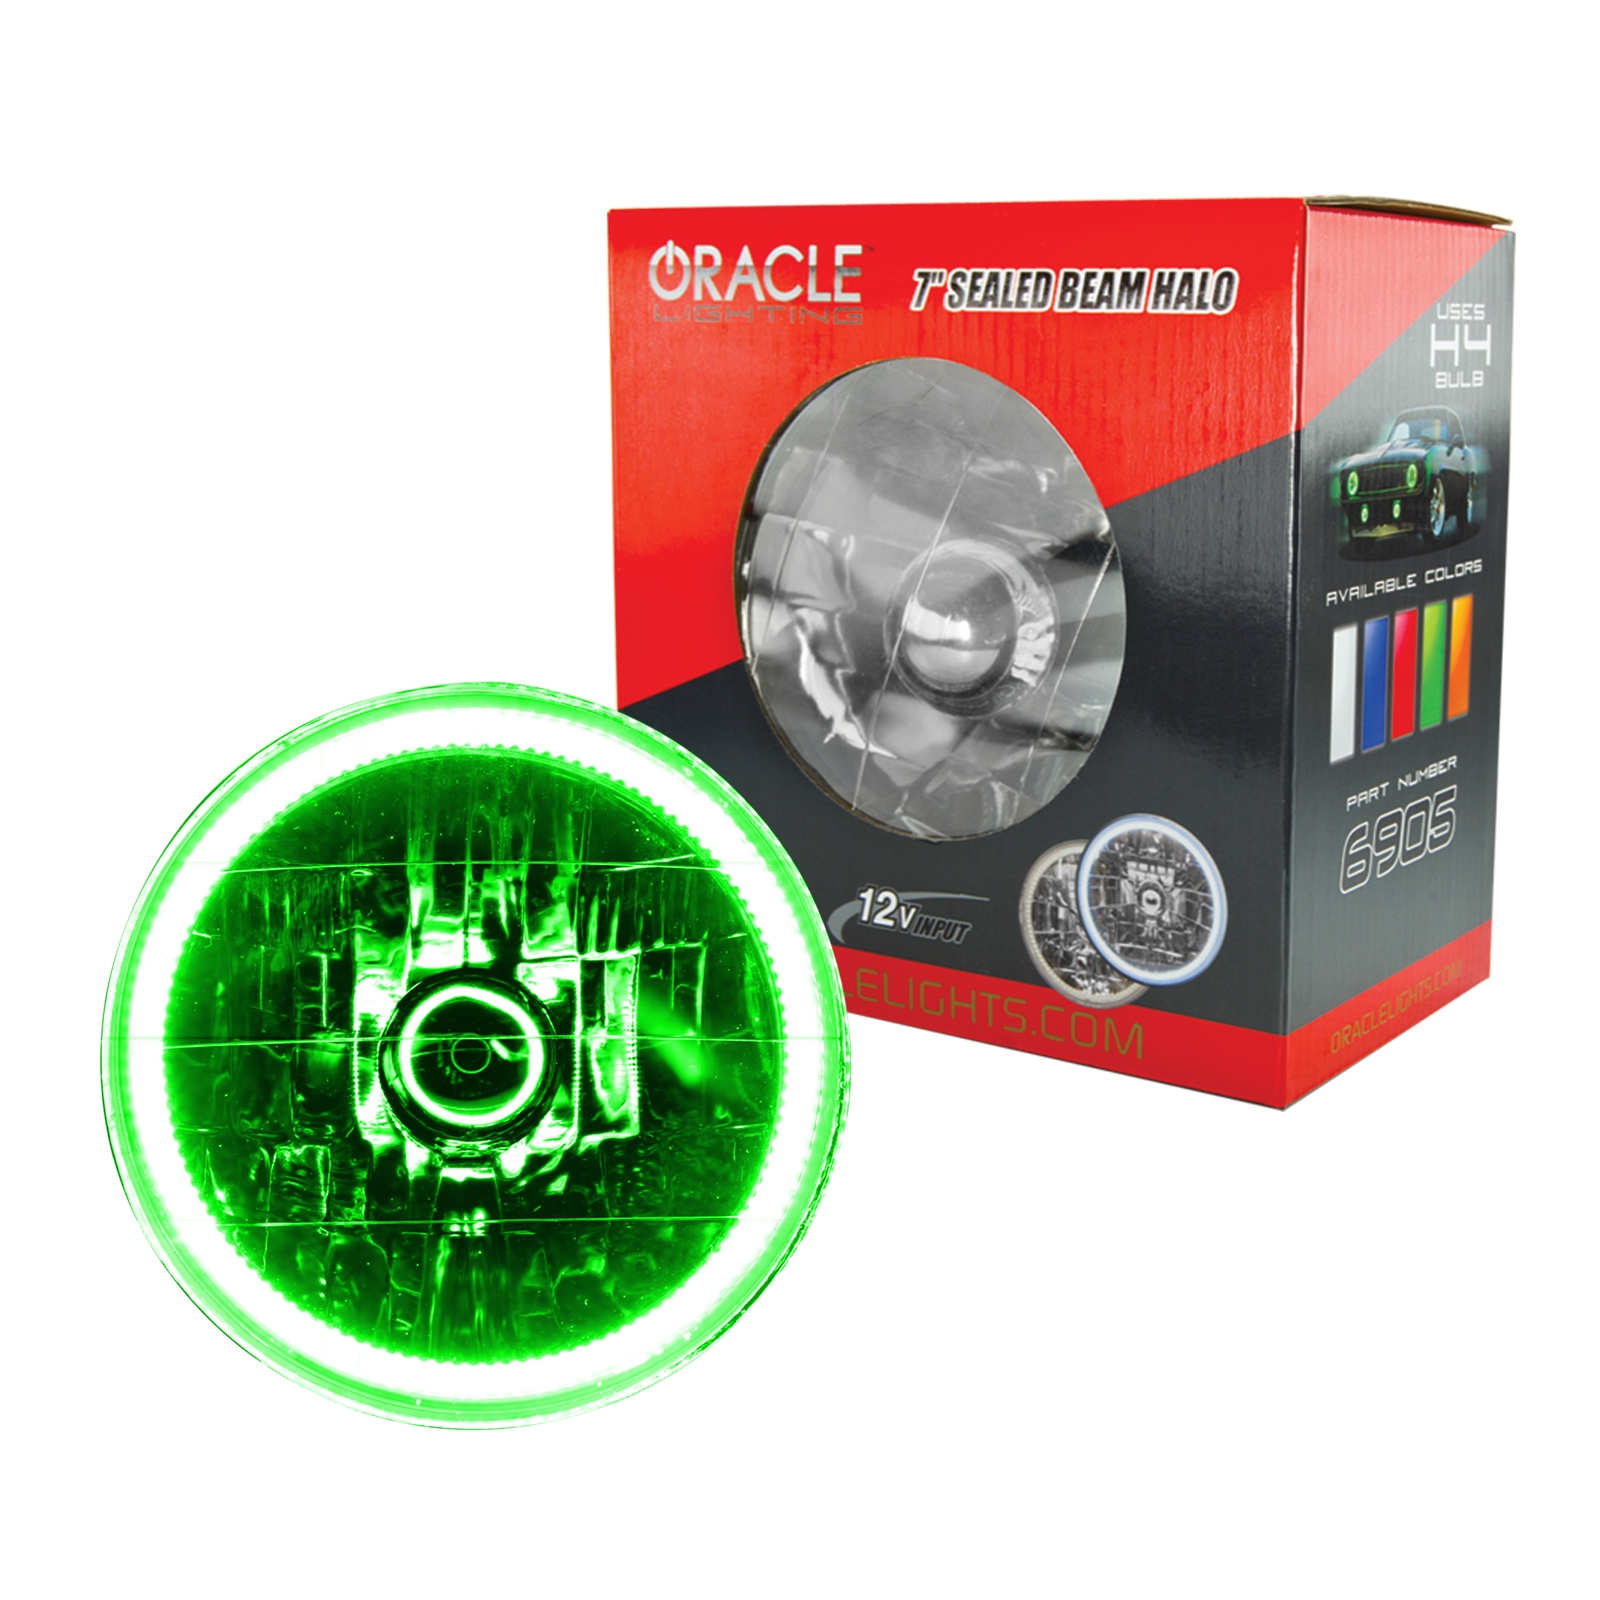 Oracle Halo H4 Conversion Headlight 7, Green, FQCV-6905-004